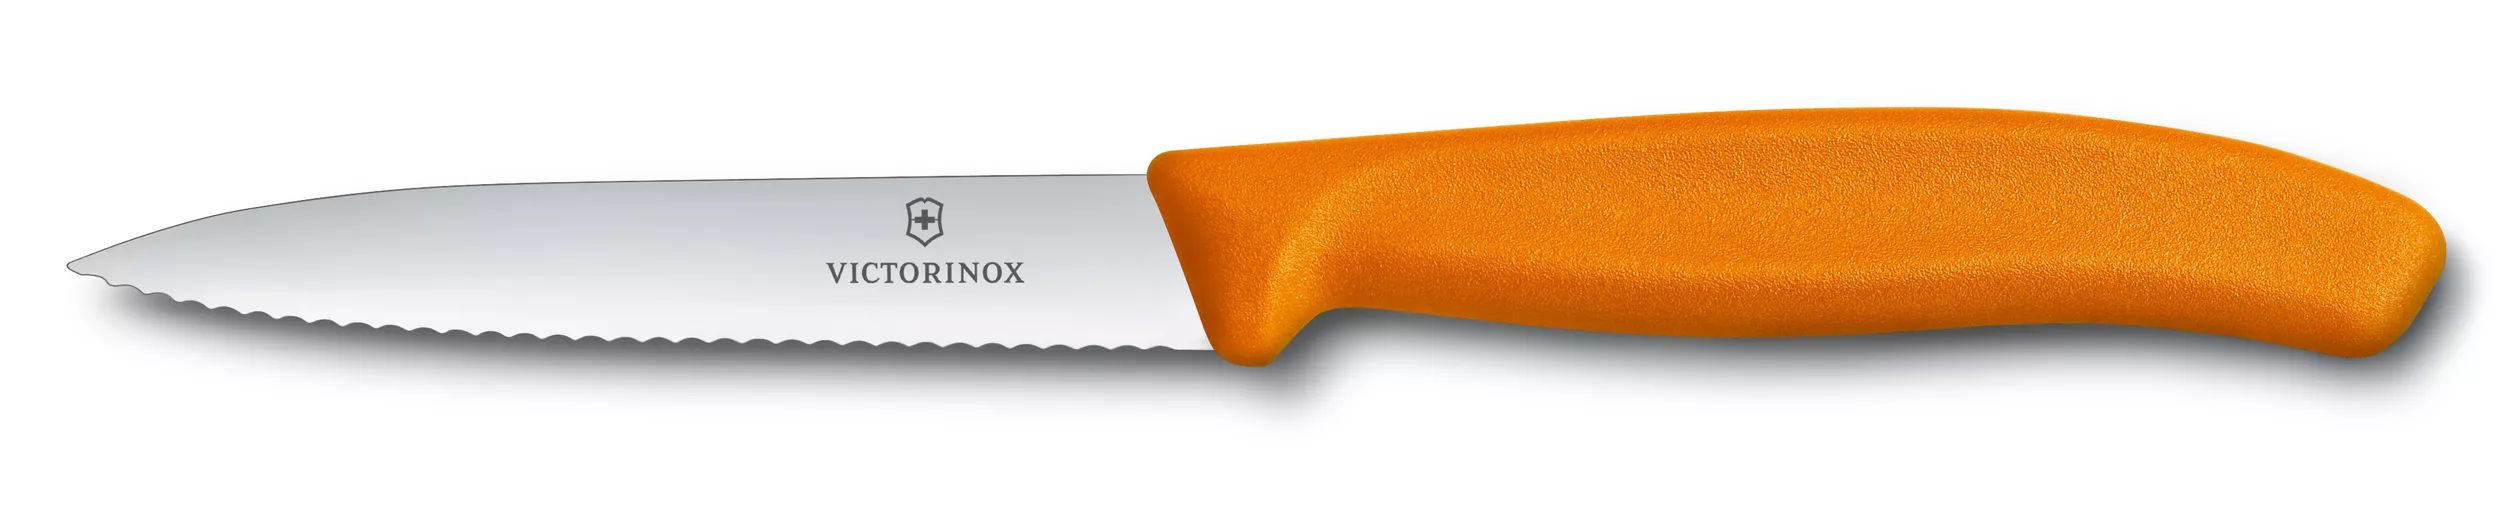 Swiss Classic Paring Knife-6.7736.L9